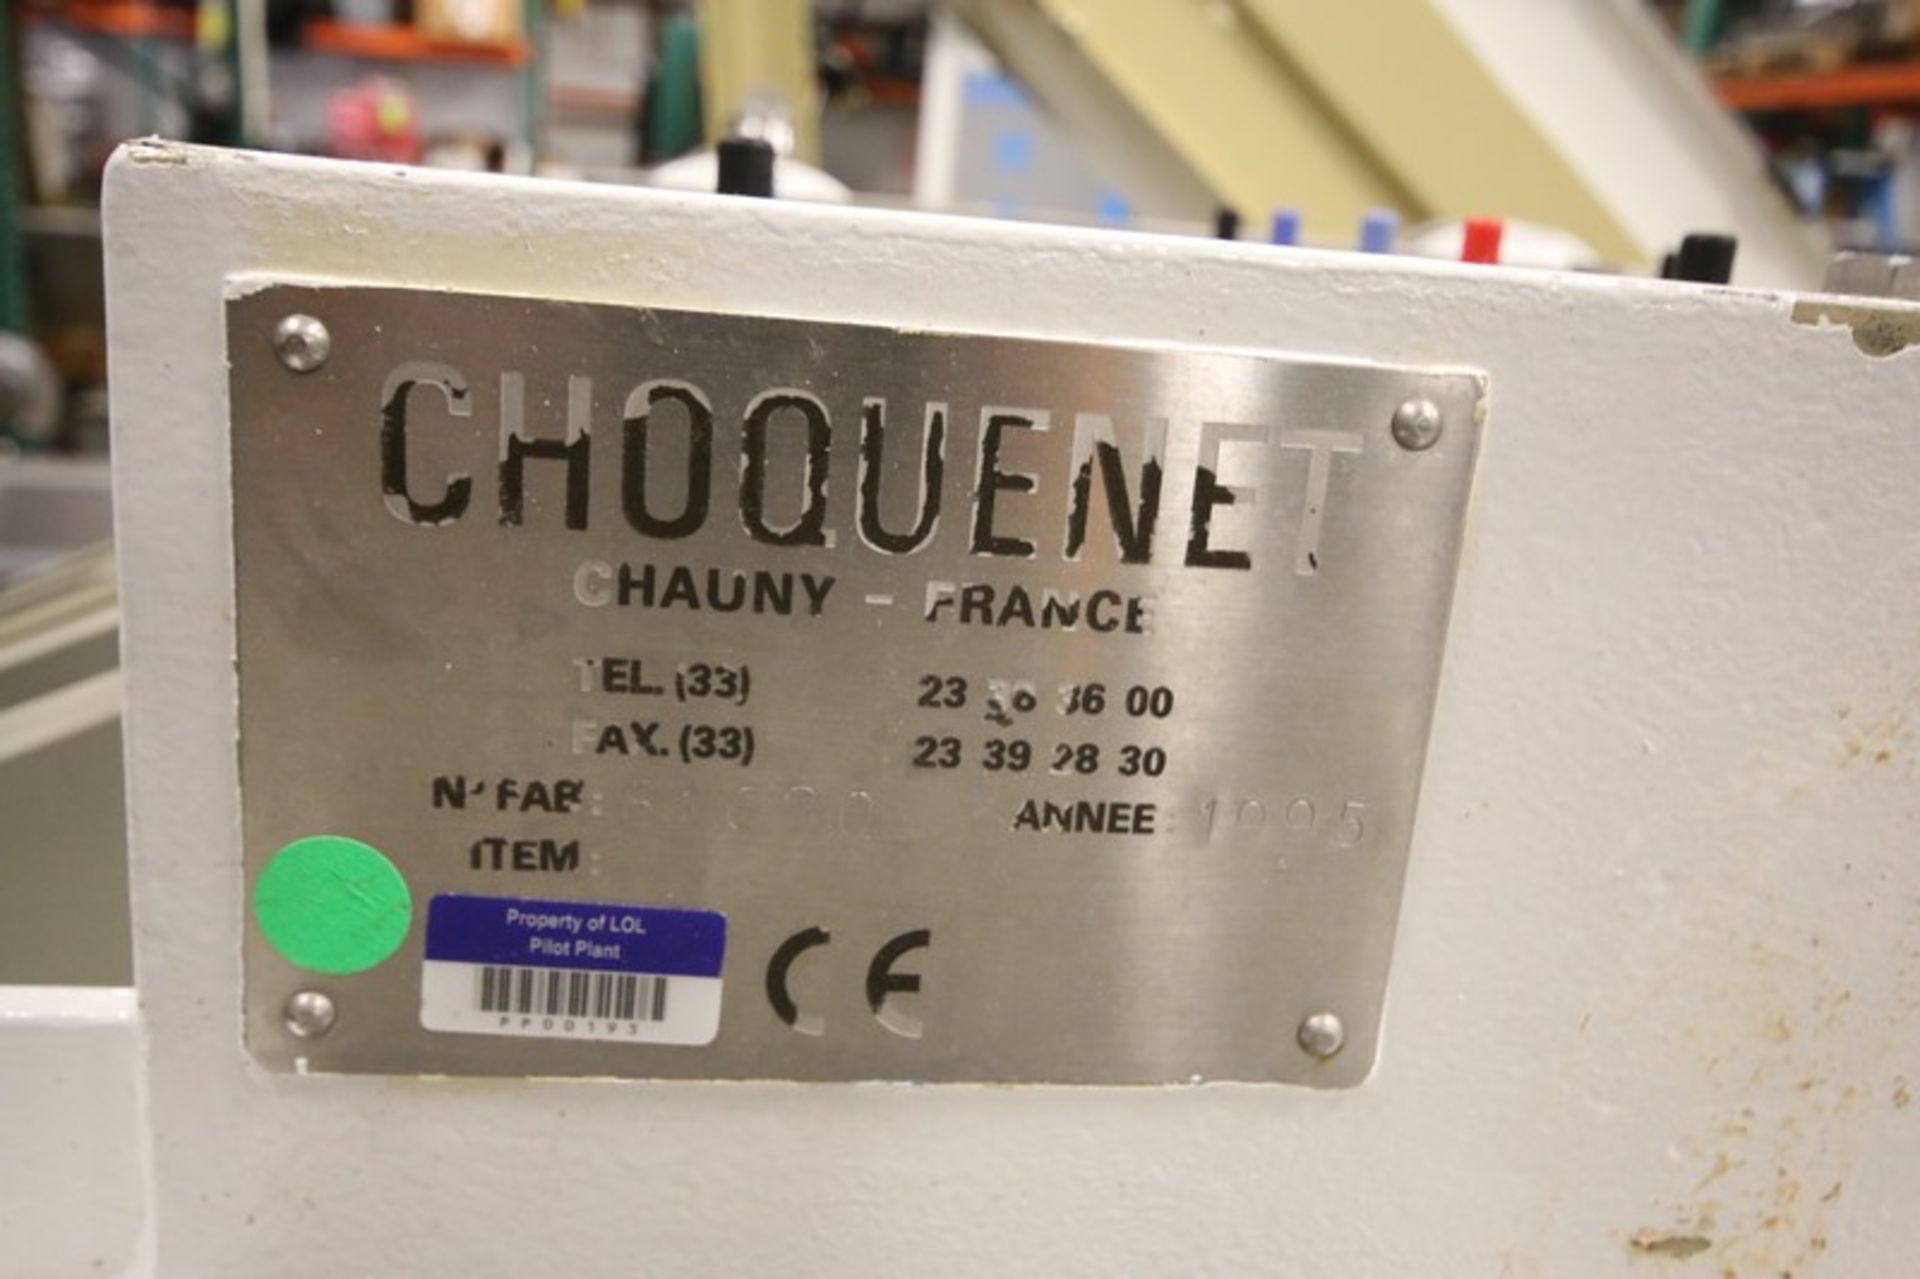 Choquenet 50" H Filter Press, Ref. No. Tirtiaux, Aff: No. WMB1 2000 USA, Ref: No. 81620, with (6) - Image 6 of 7